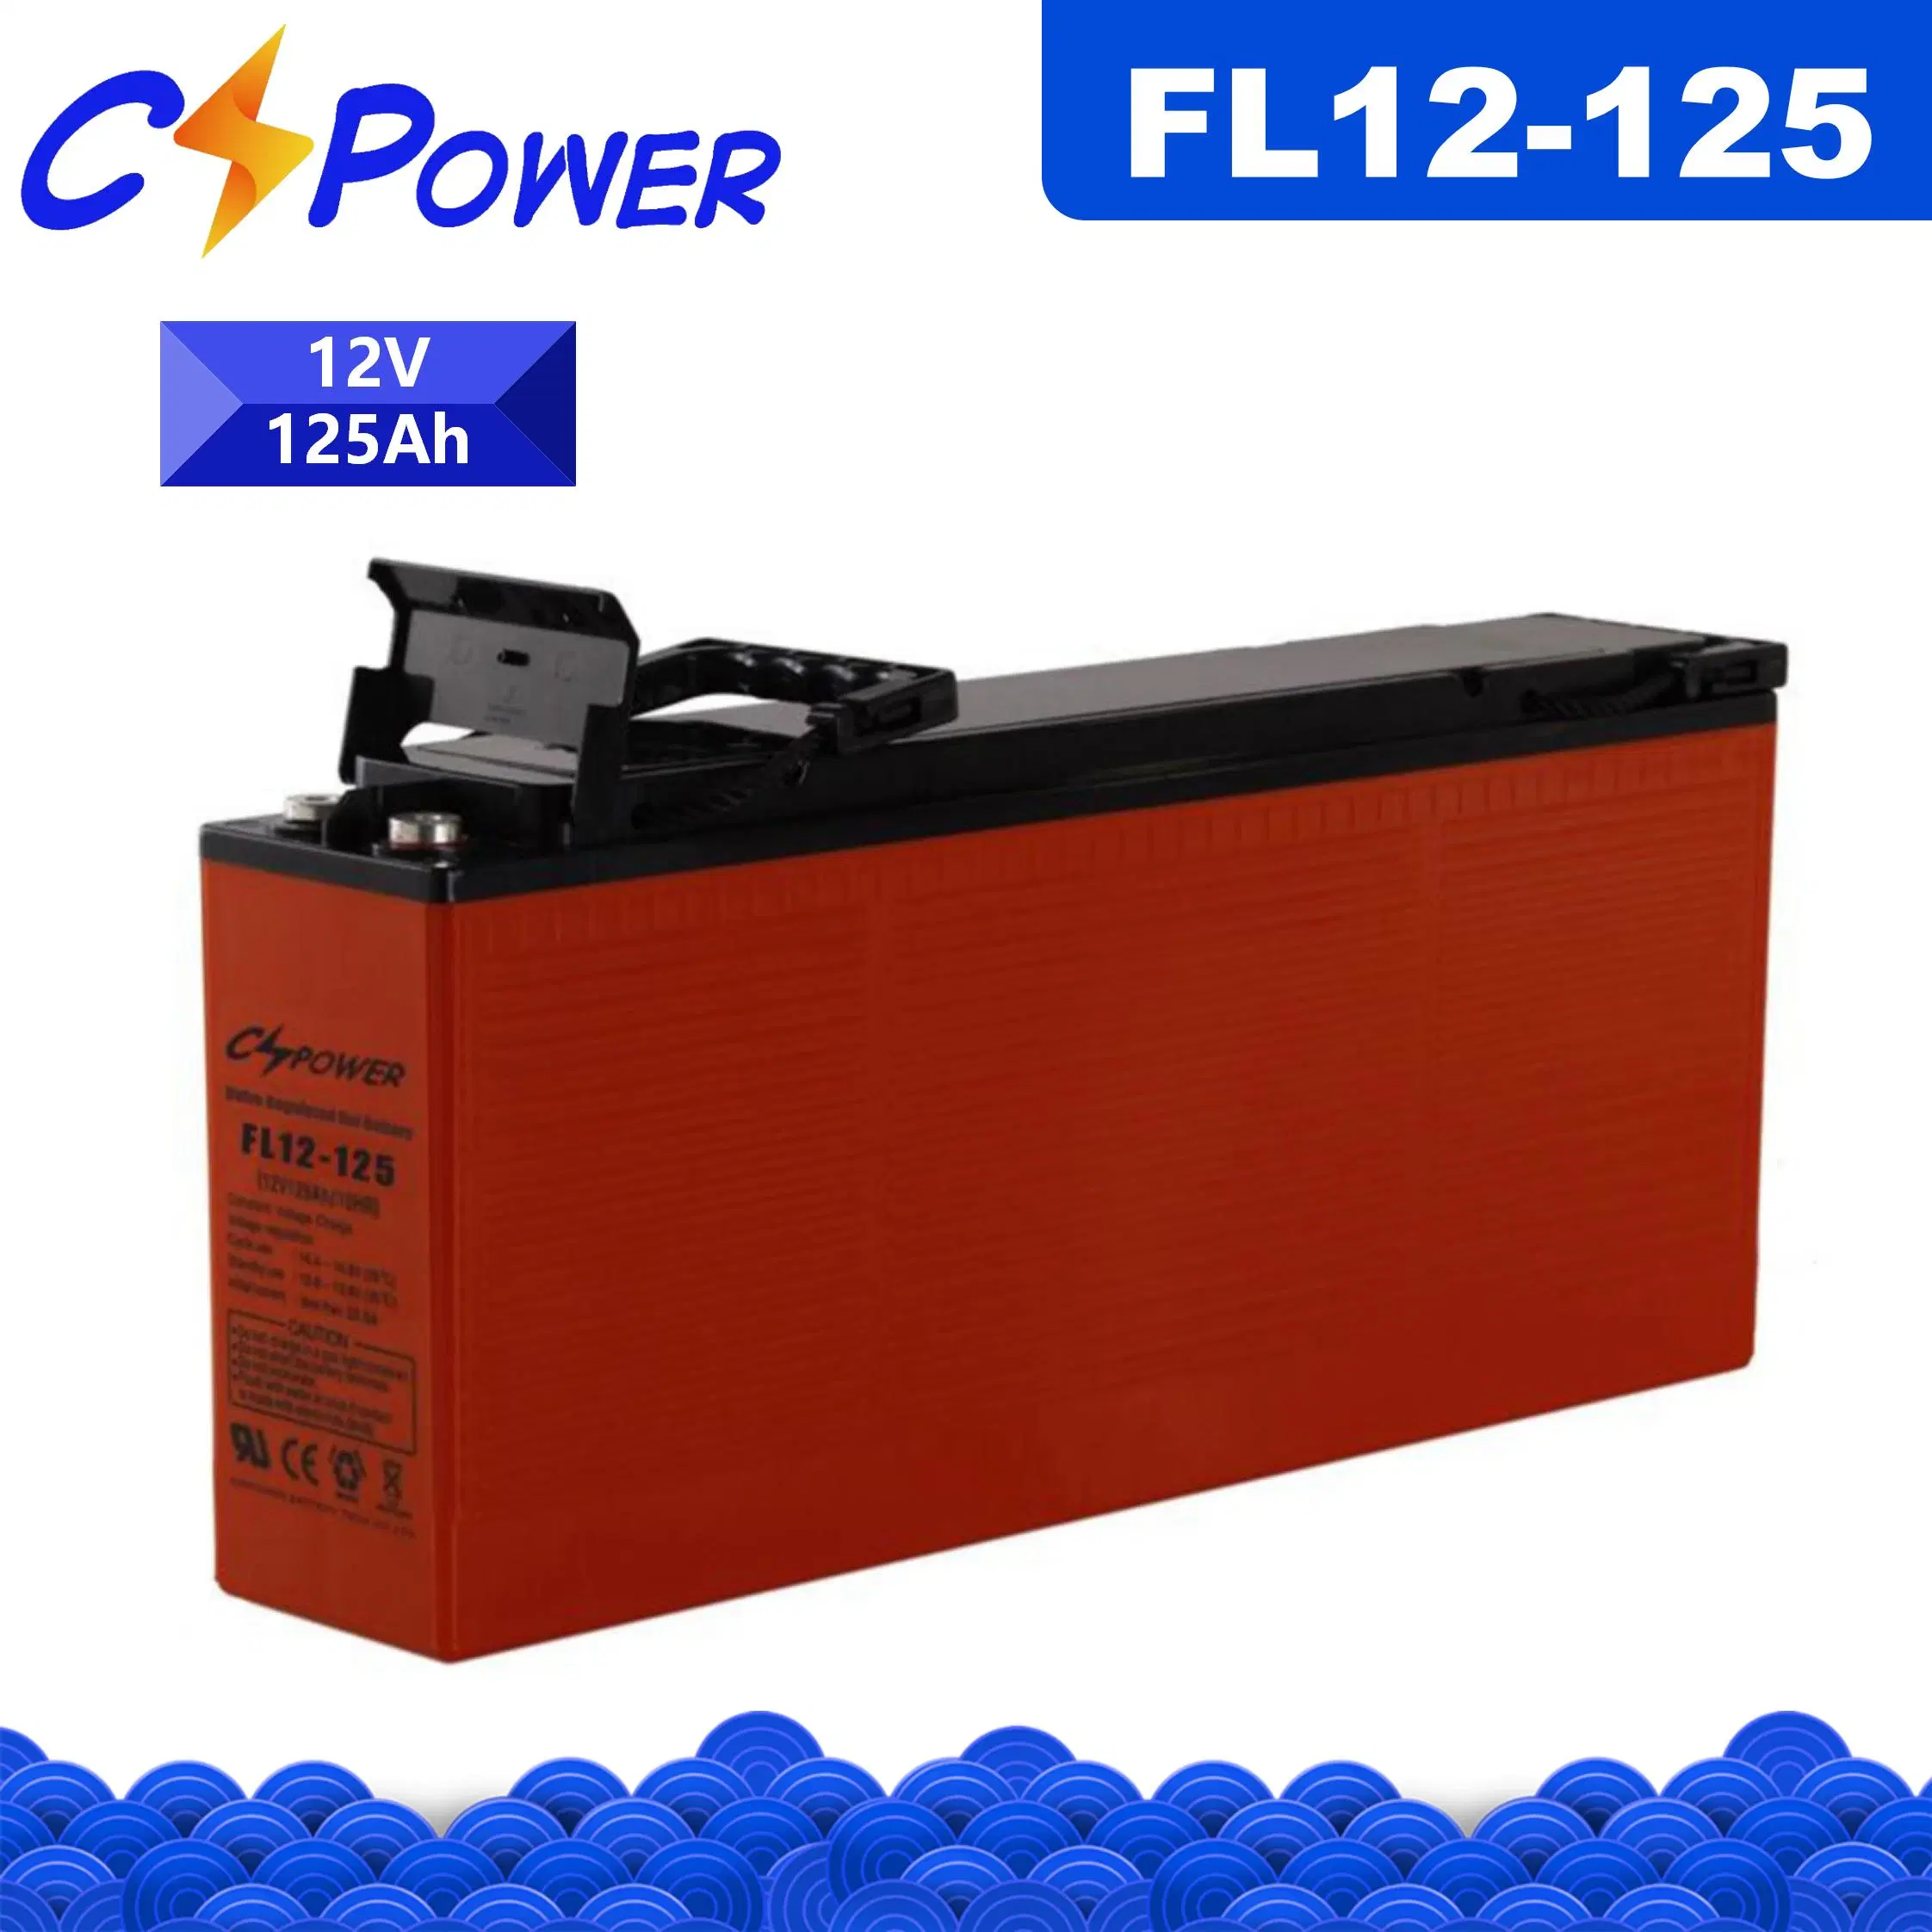 Cspower 12V 125ah Deep Cycle Gel Battery - UPS, EPS, Telecom